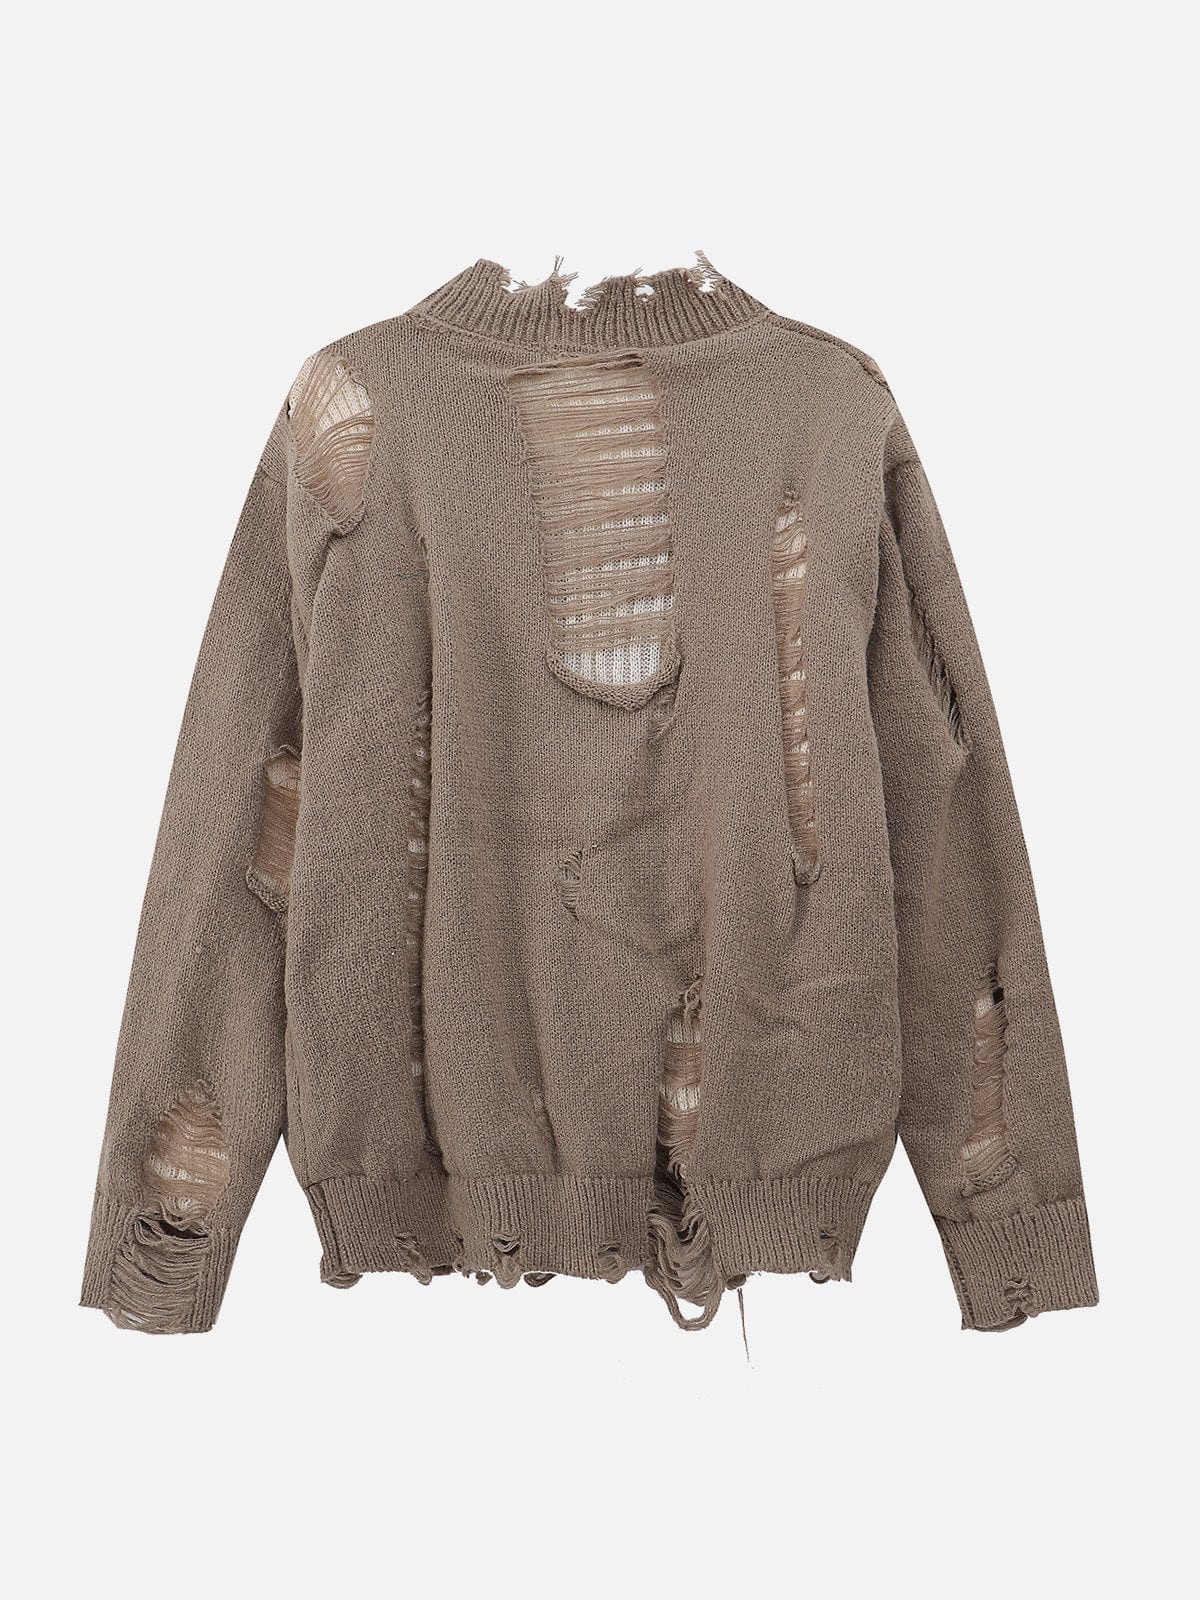 NEV Irregular Raw Edge Ripped Cardigan Sweater